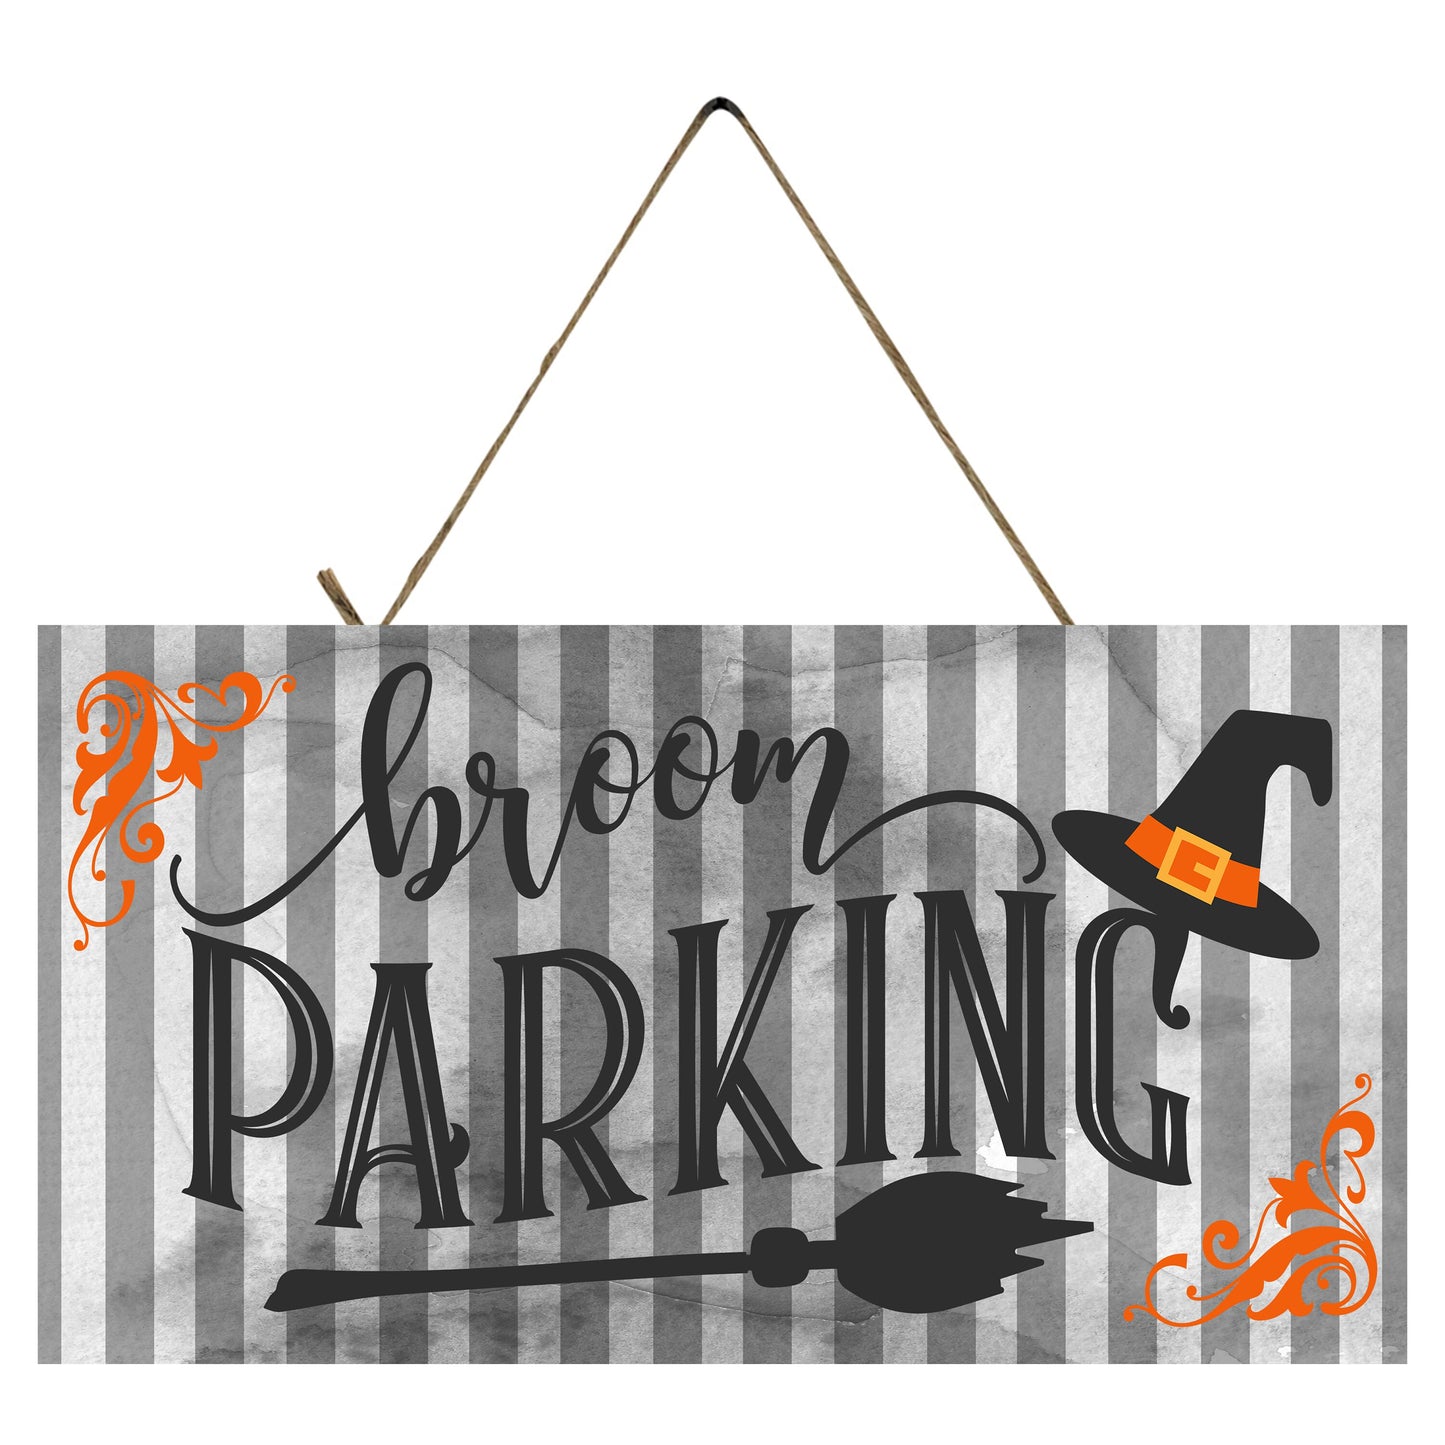 Broom Parking Halloween Printed Handmade Wood Sign